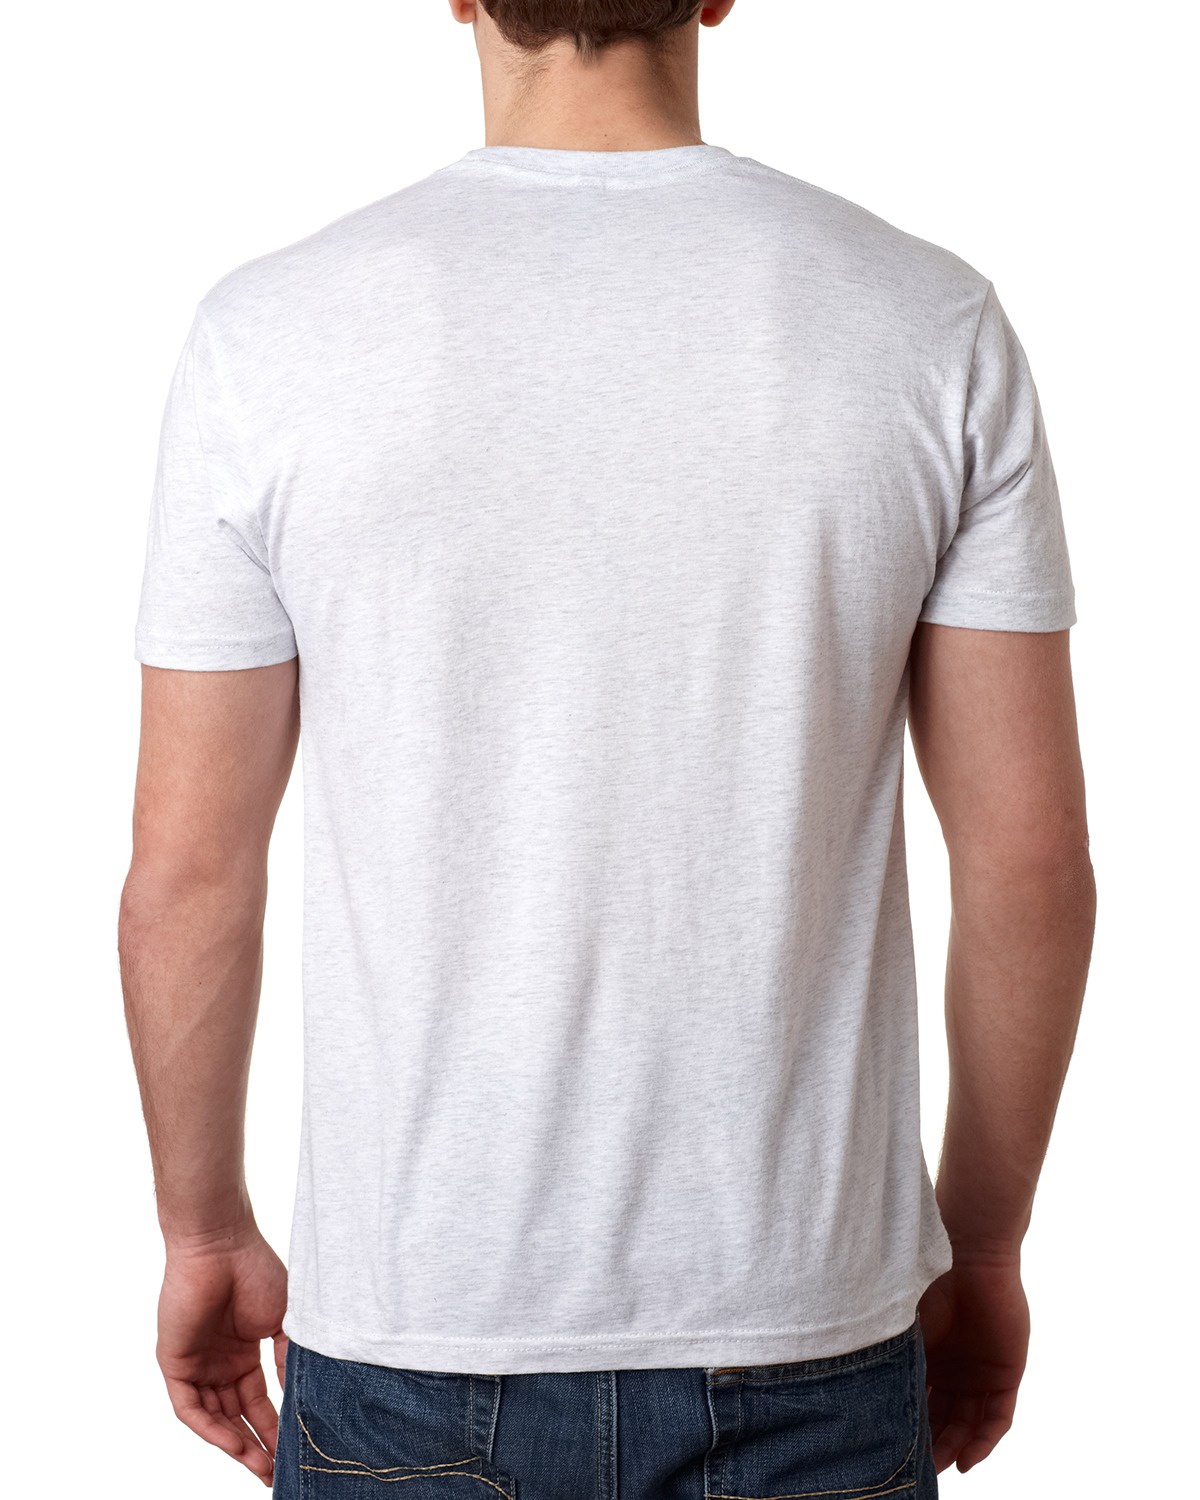 'Next Level 6010A Men's Made in USA Triblend T-Shirt'